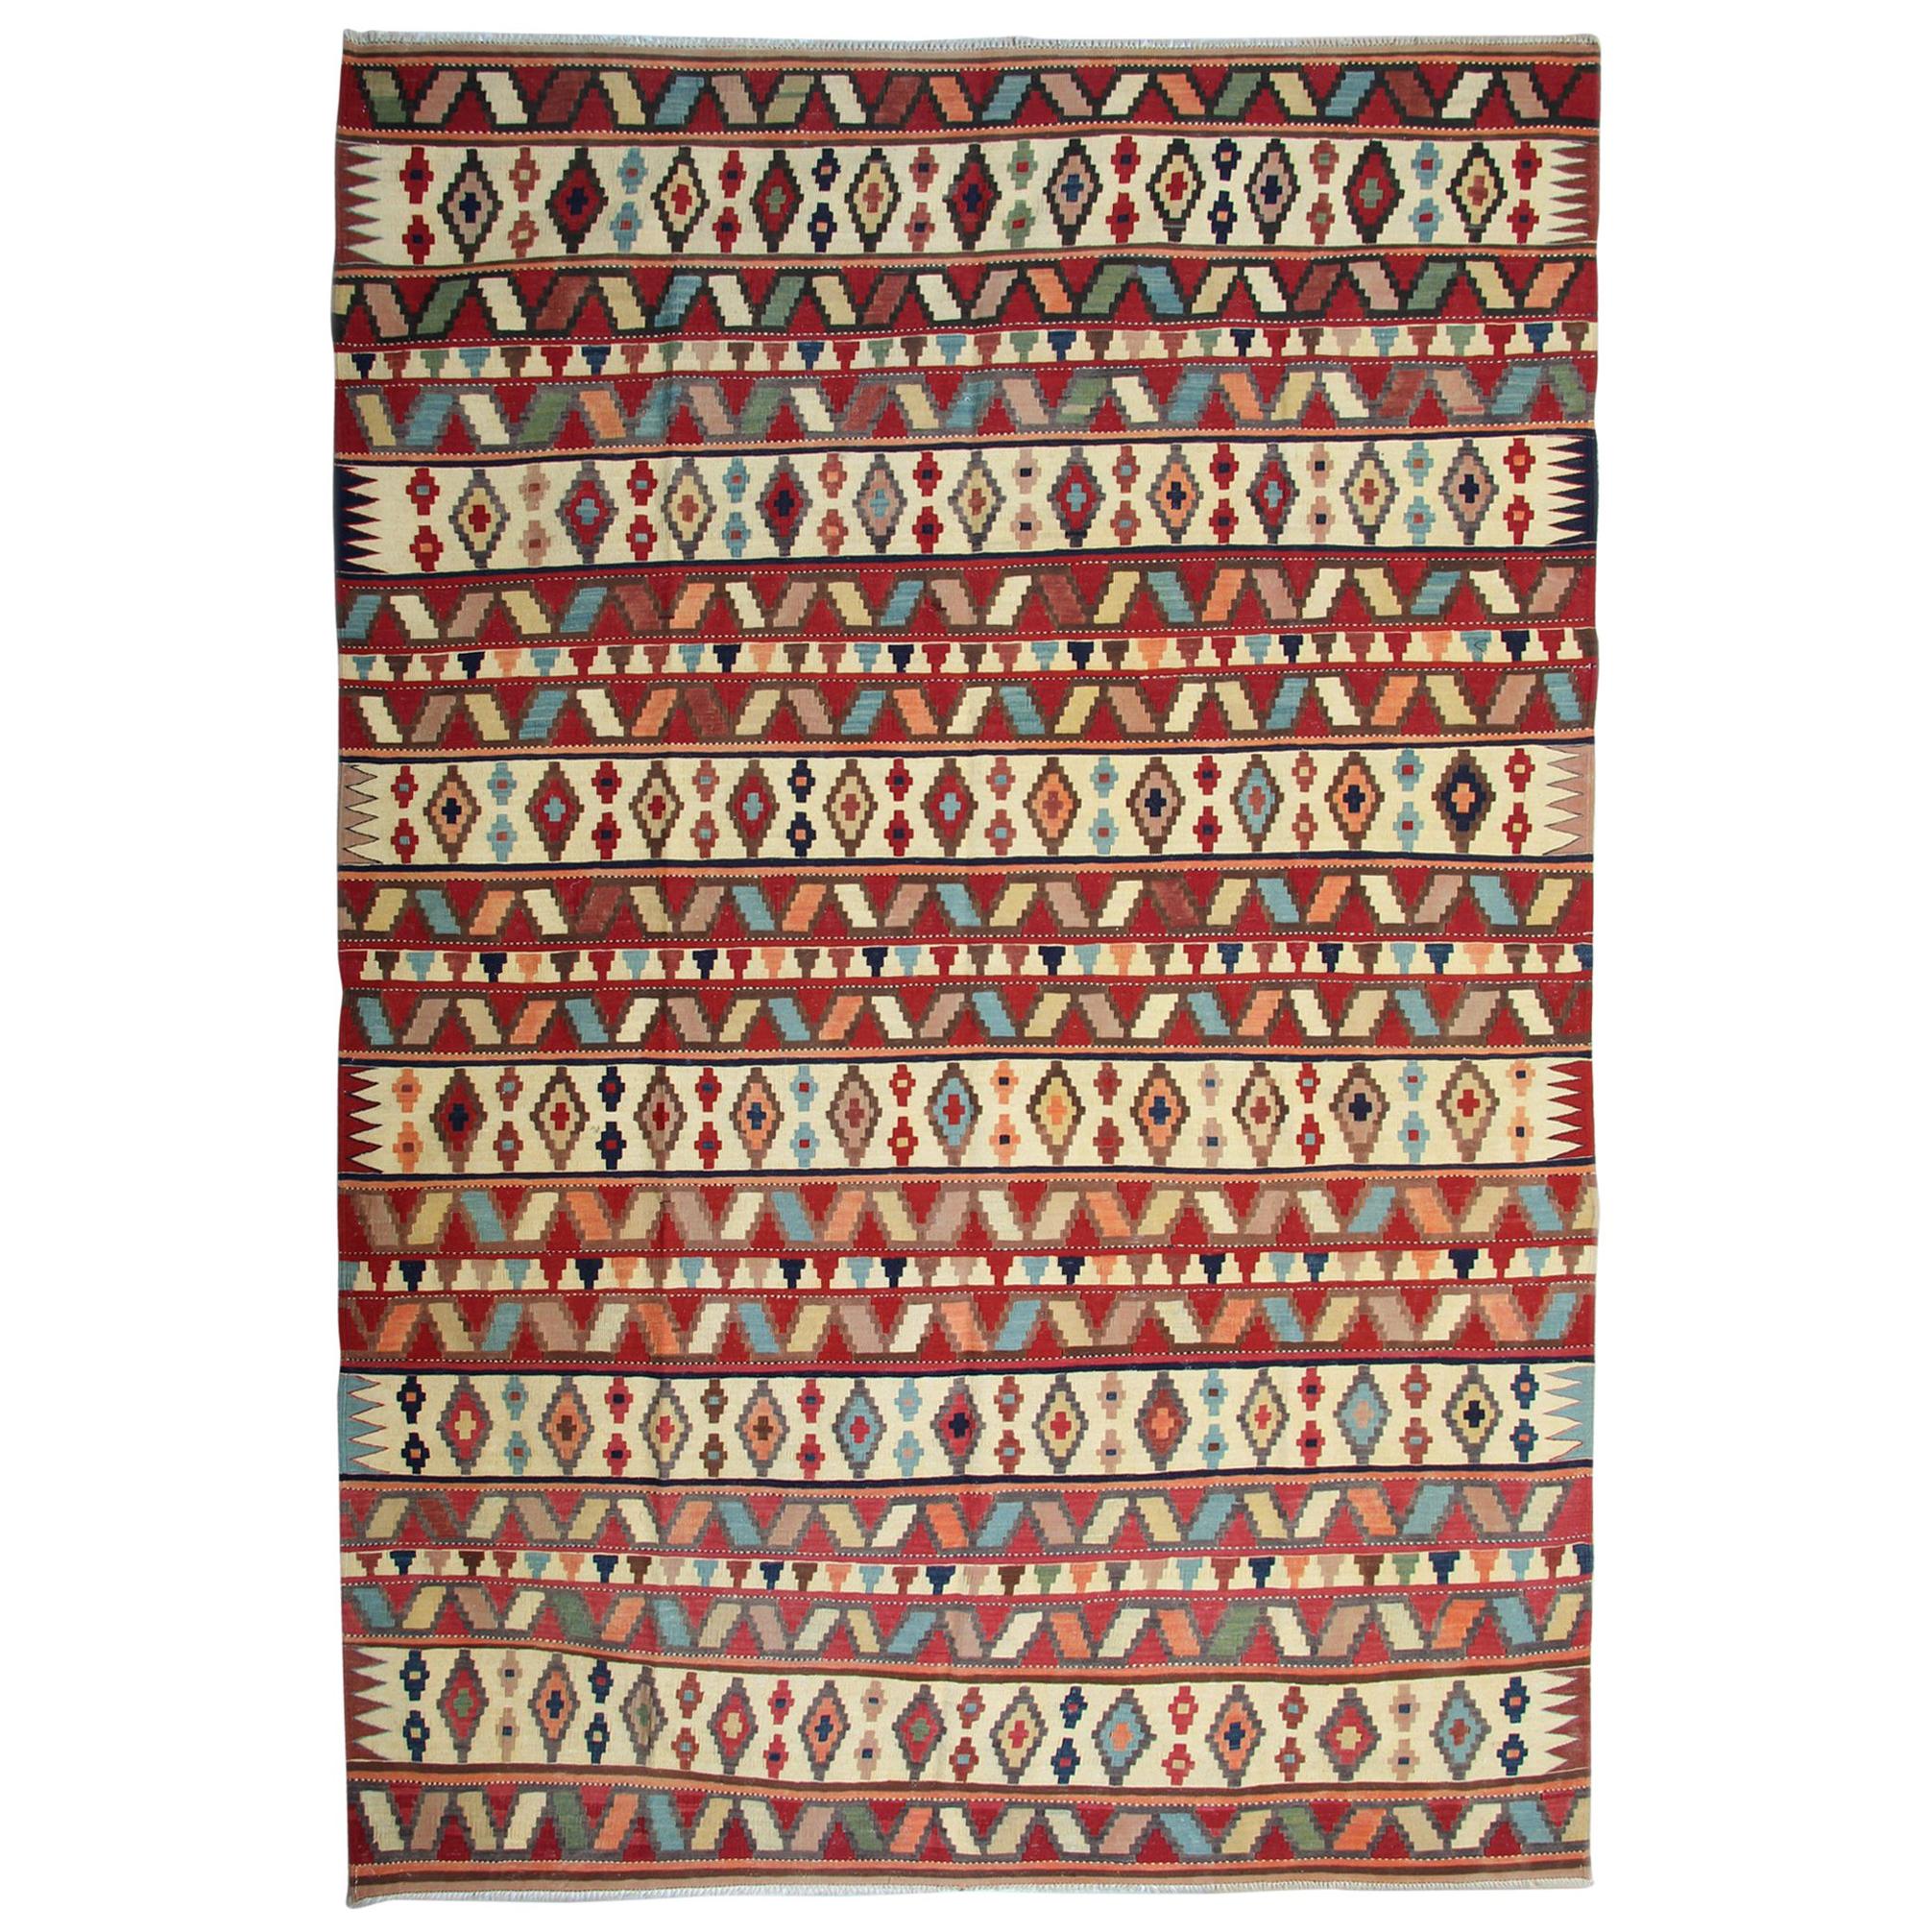 Tapis ancien, tapis oriental vintage, tapis Kilim rayé, tapis caucasien fait main